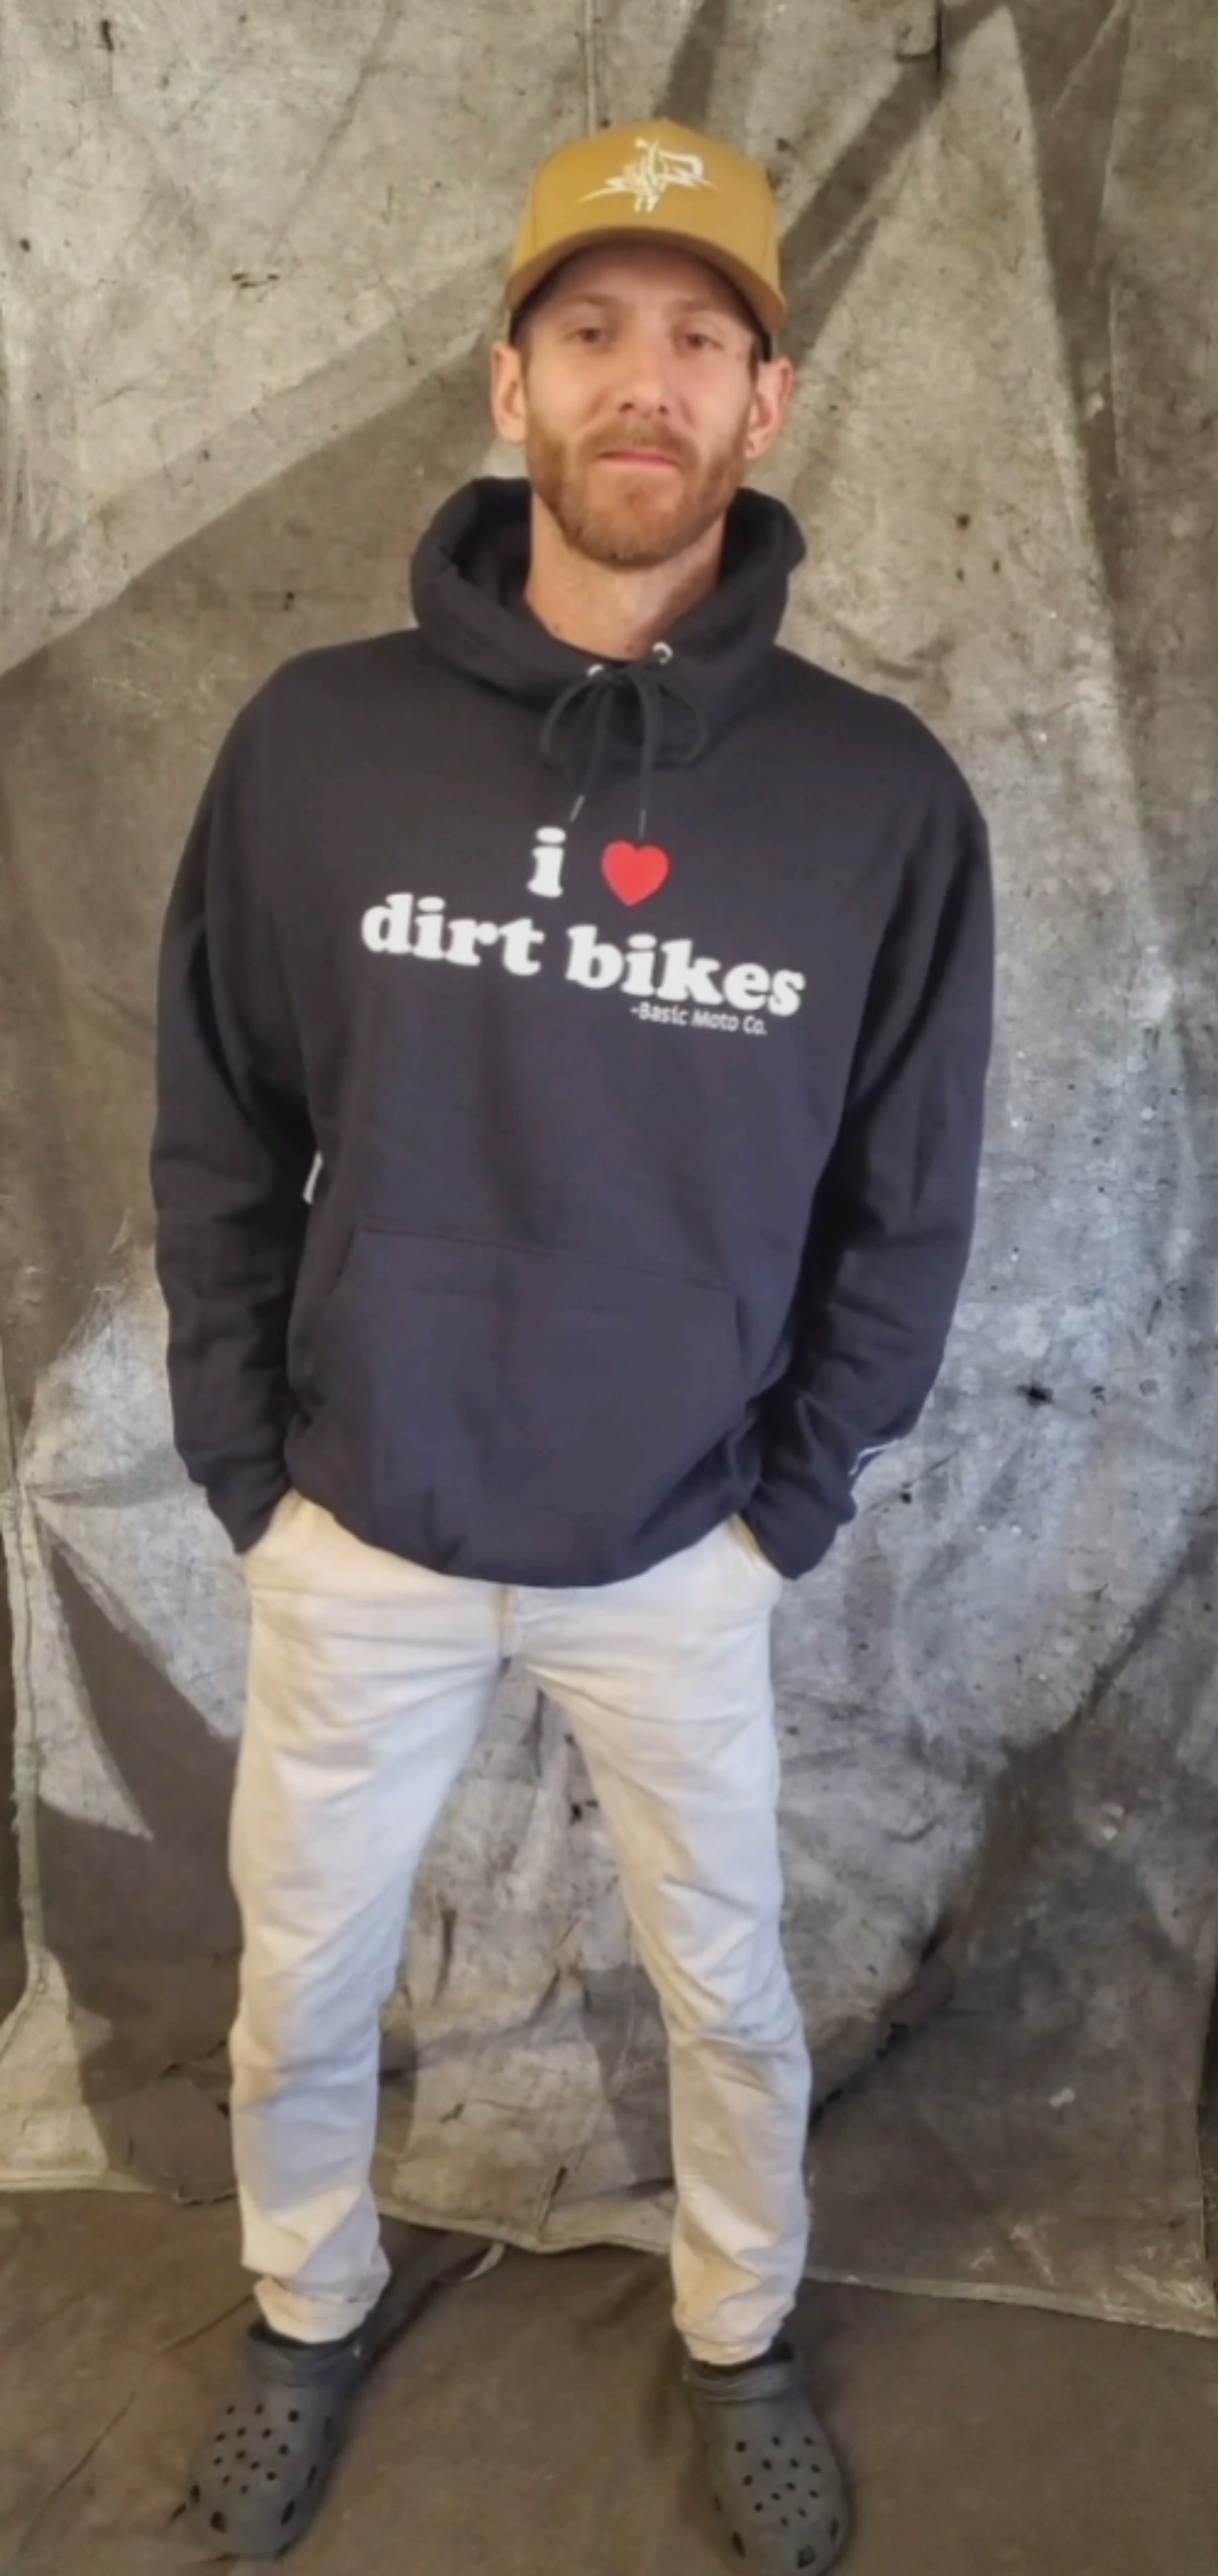 I Heart Dirt Bikes - Hooded Sweatshirt - Black